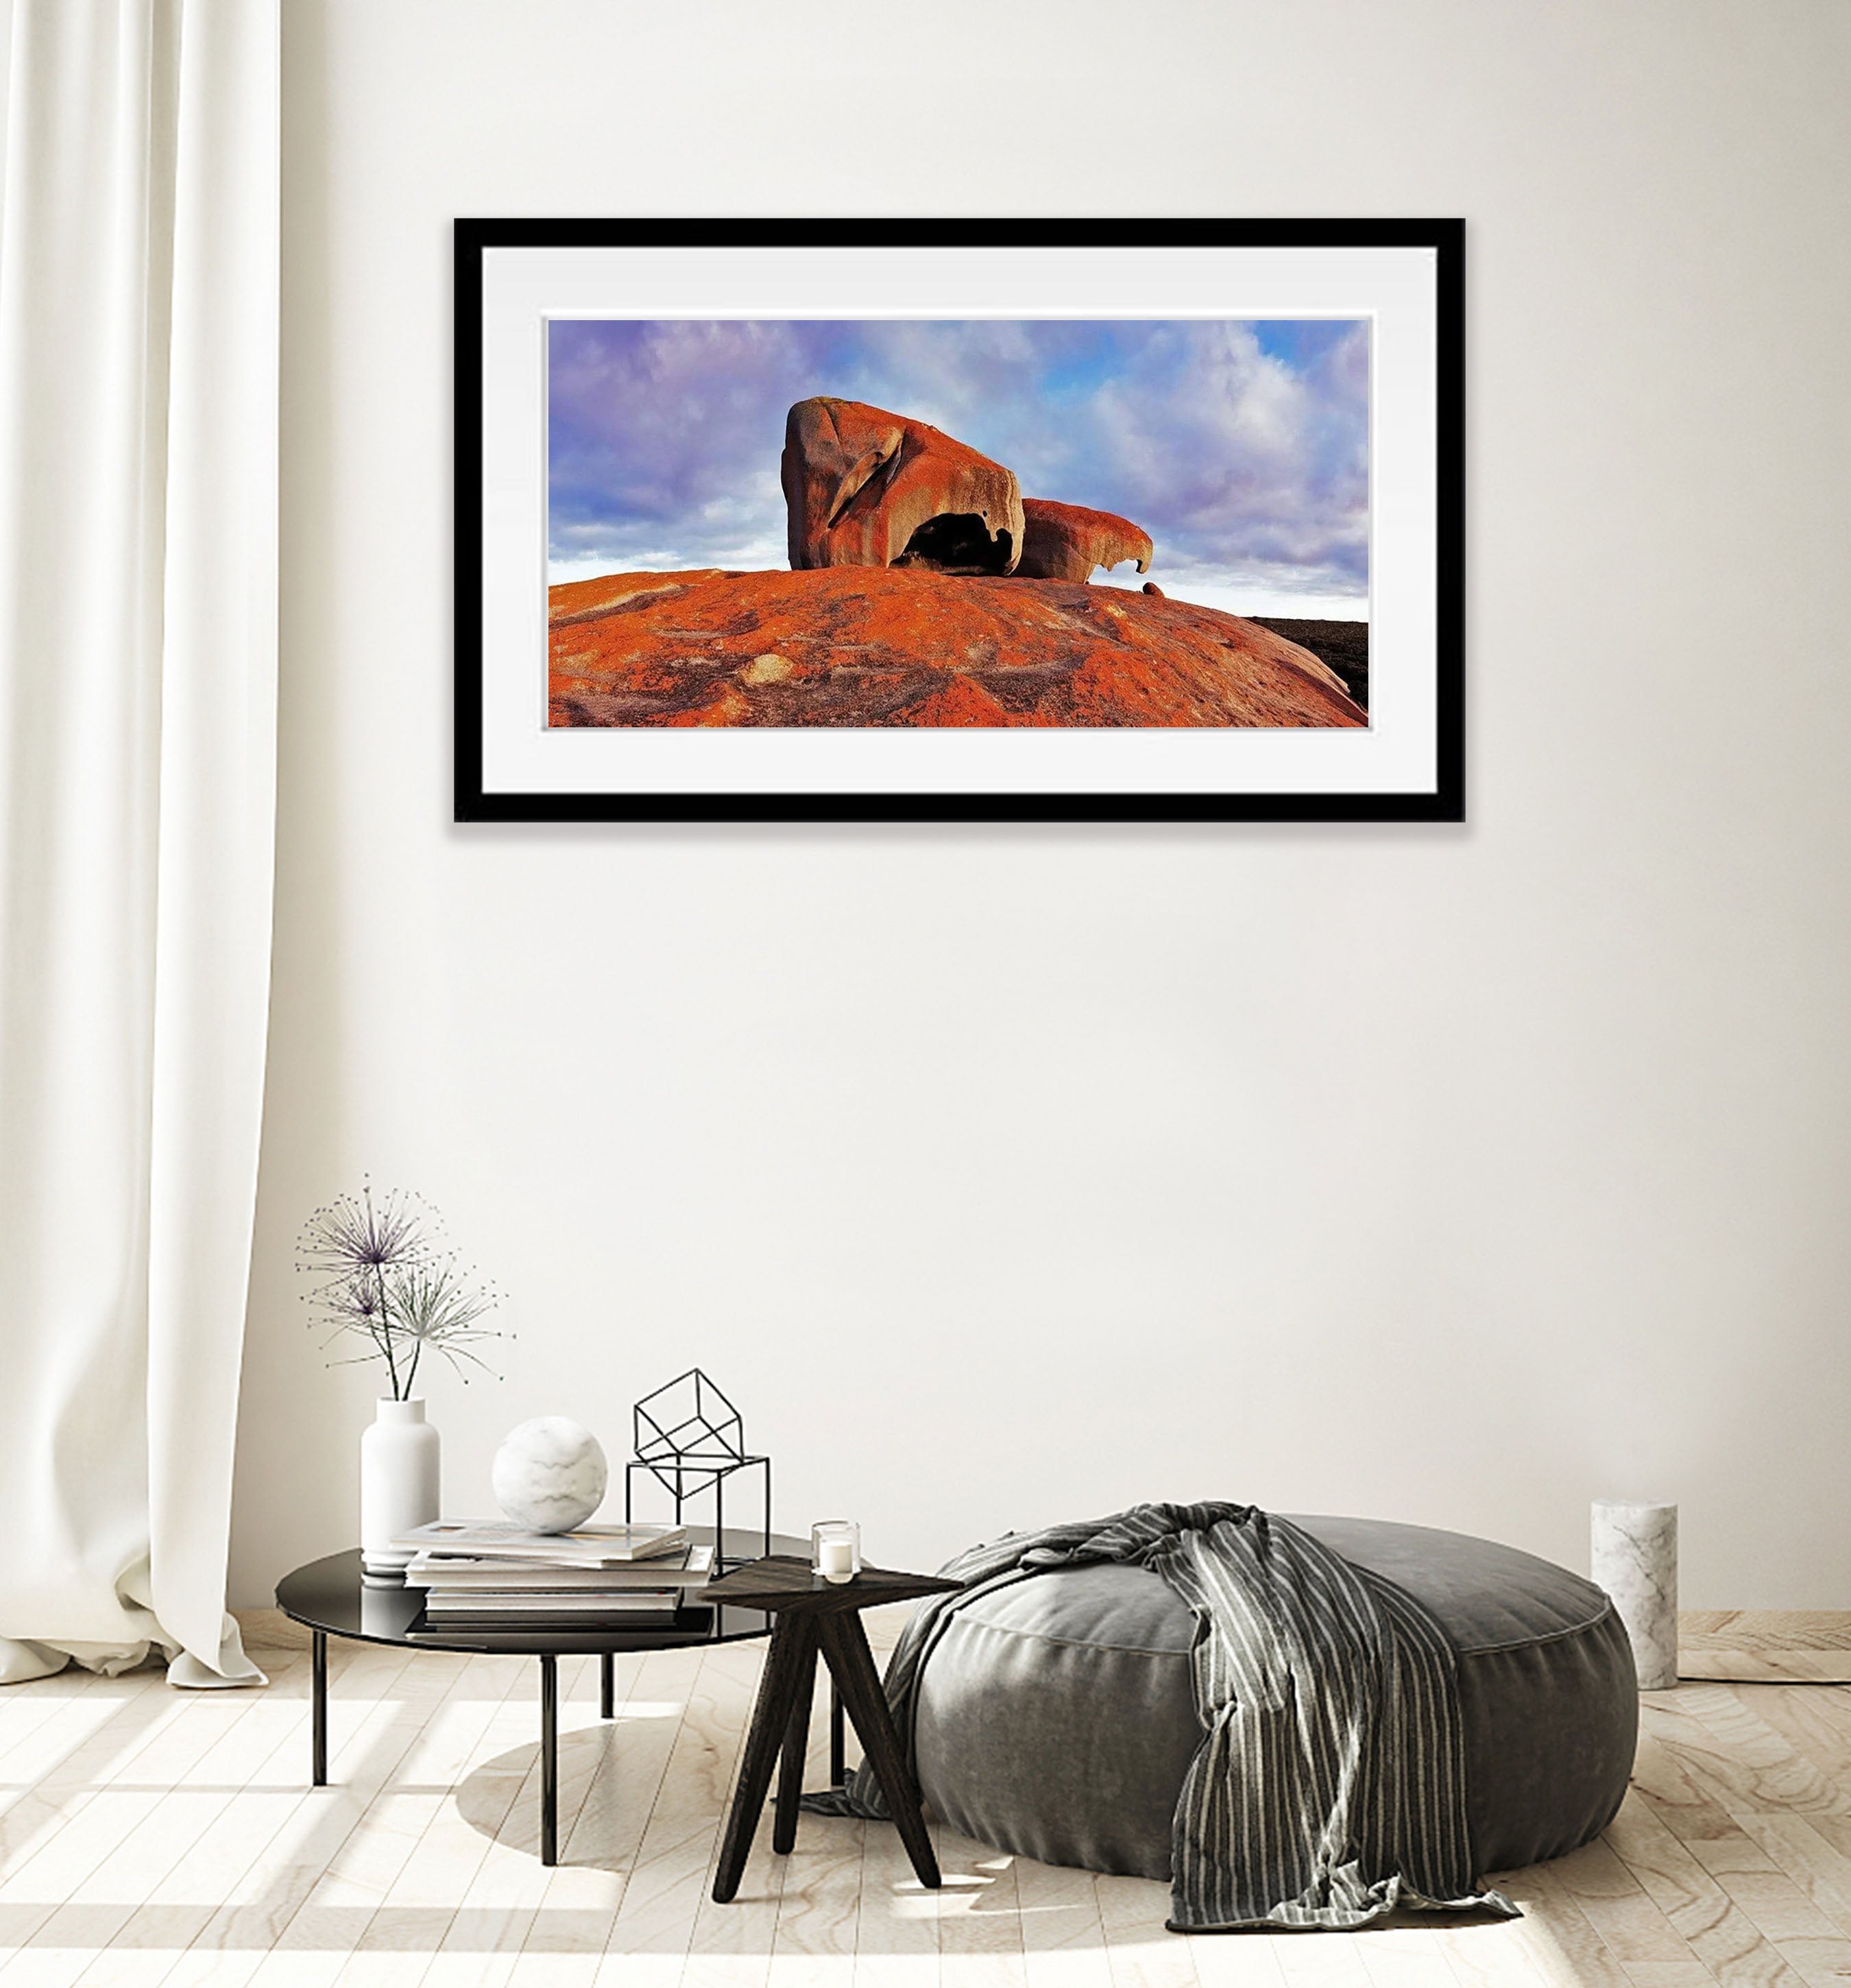 Remarkable Rocks, Kangaroo Island, South Australia